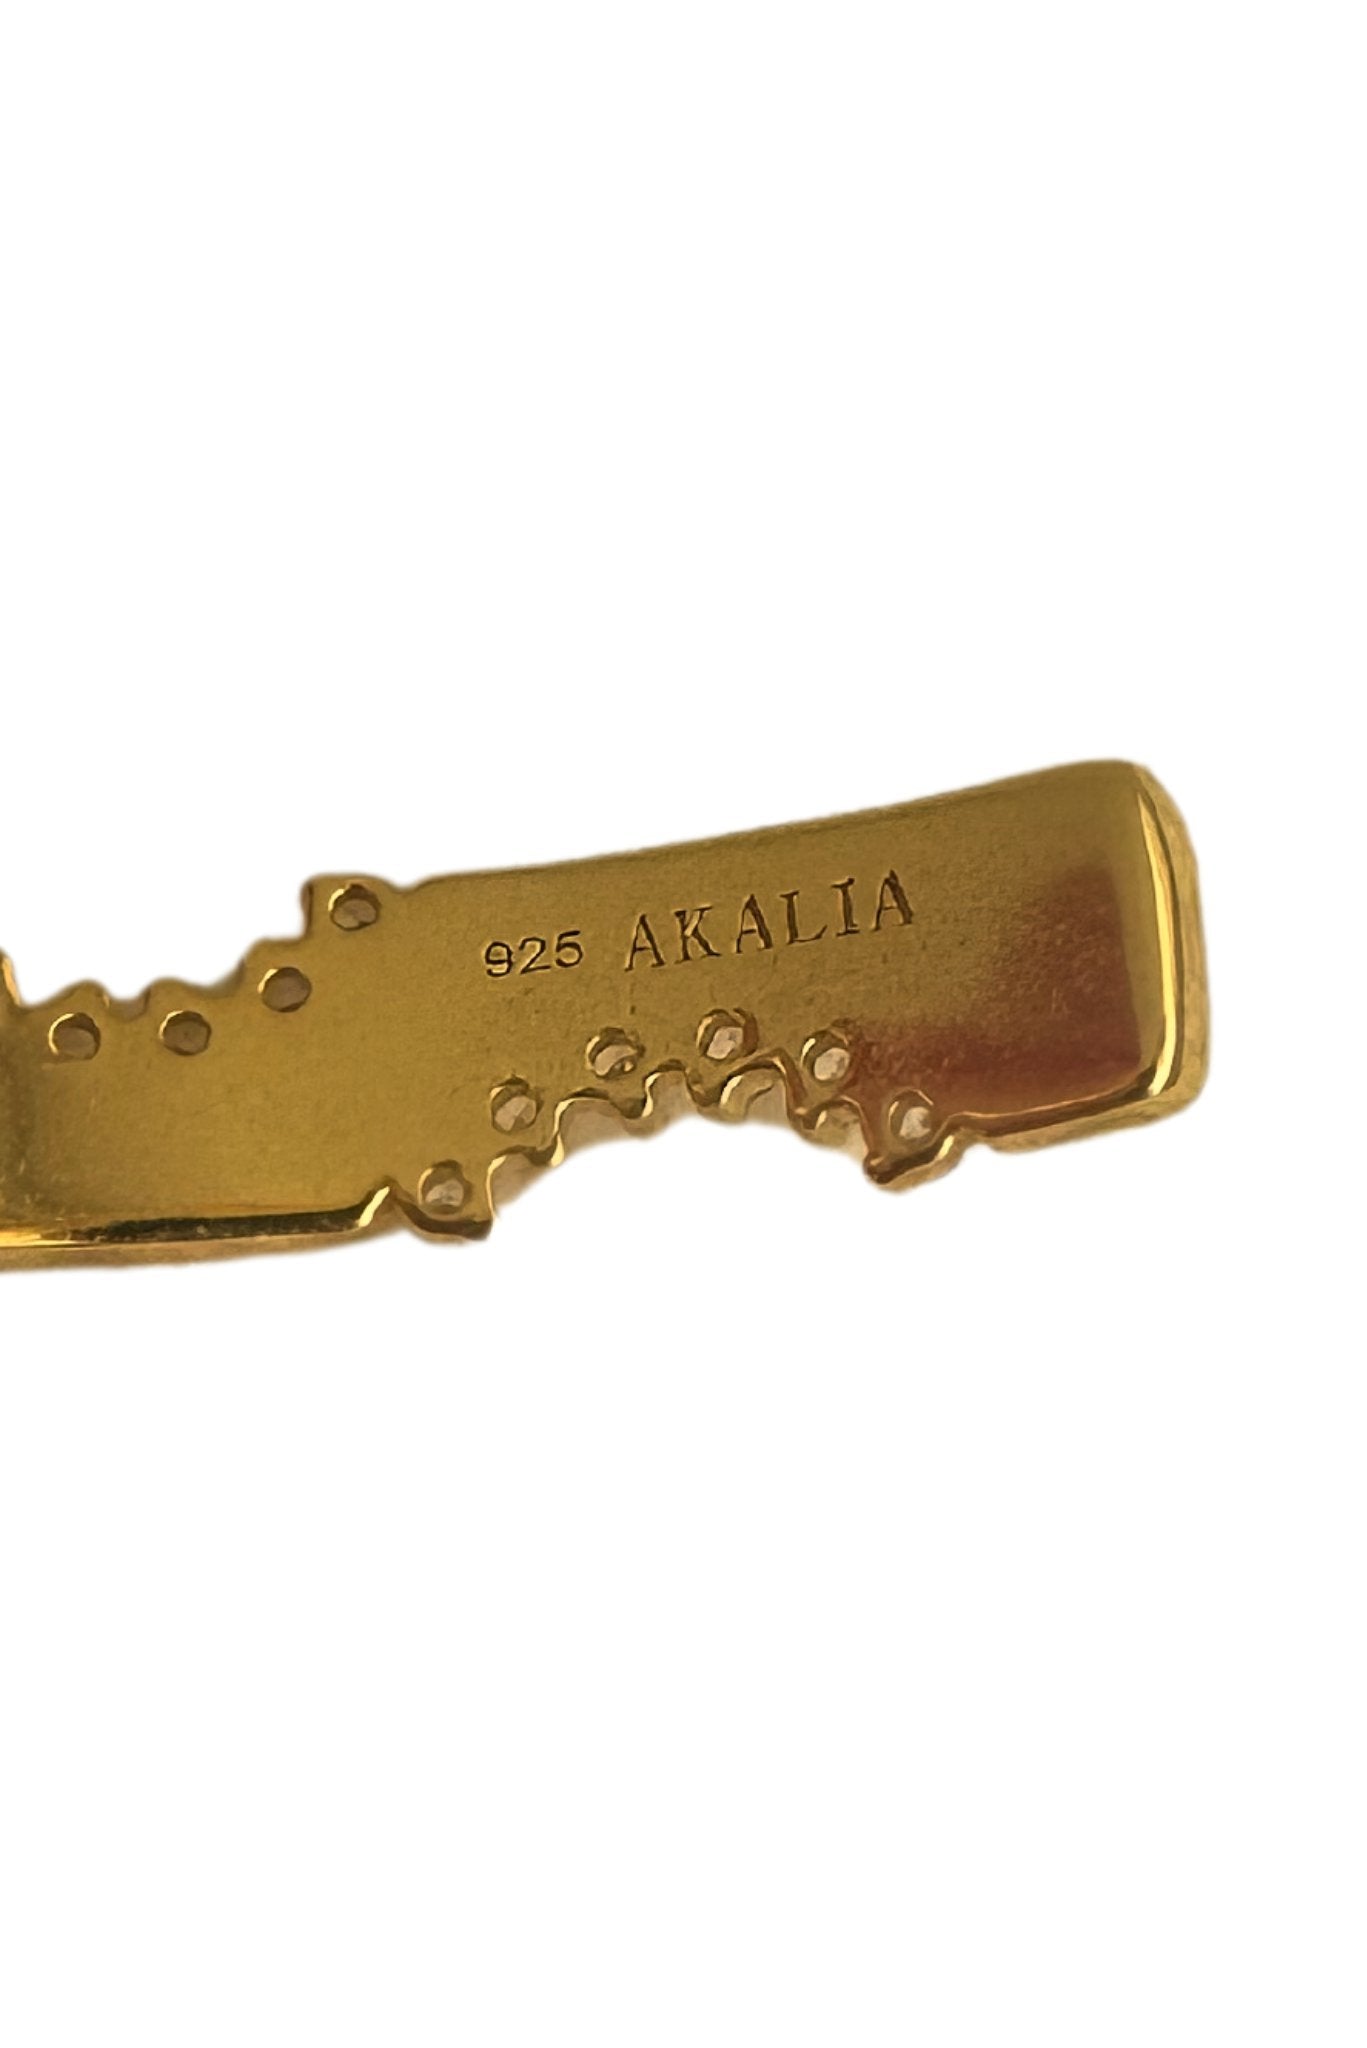 Waterproof Gold Plated with Diamond Cuff Sterling Silver Breathe Bracelet - Akalia